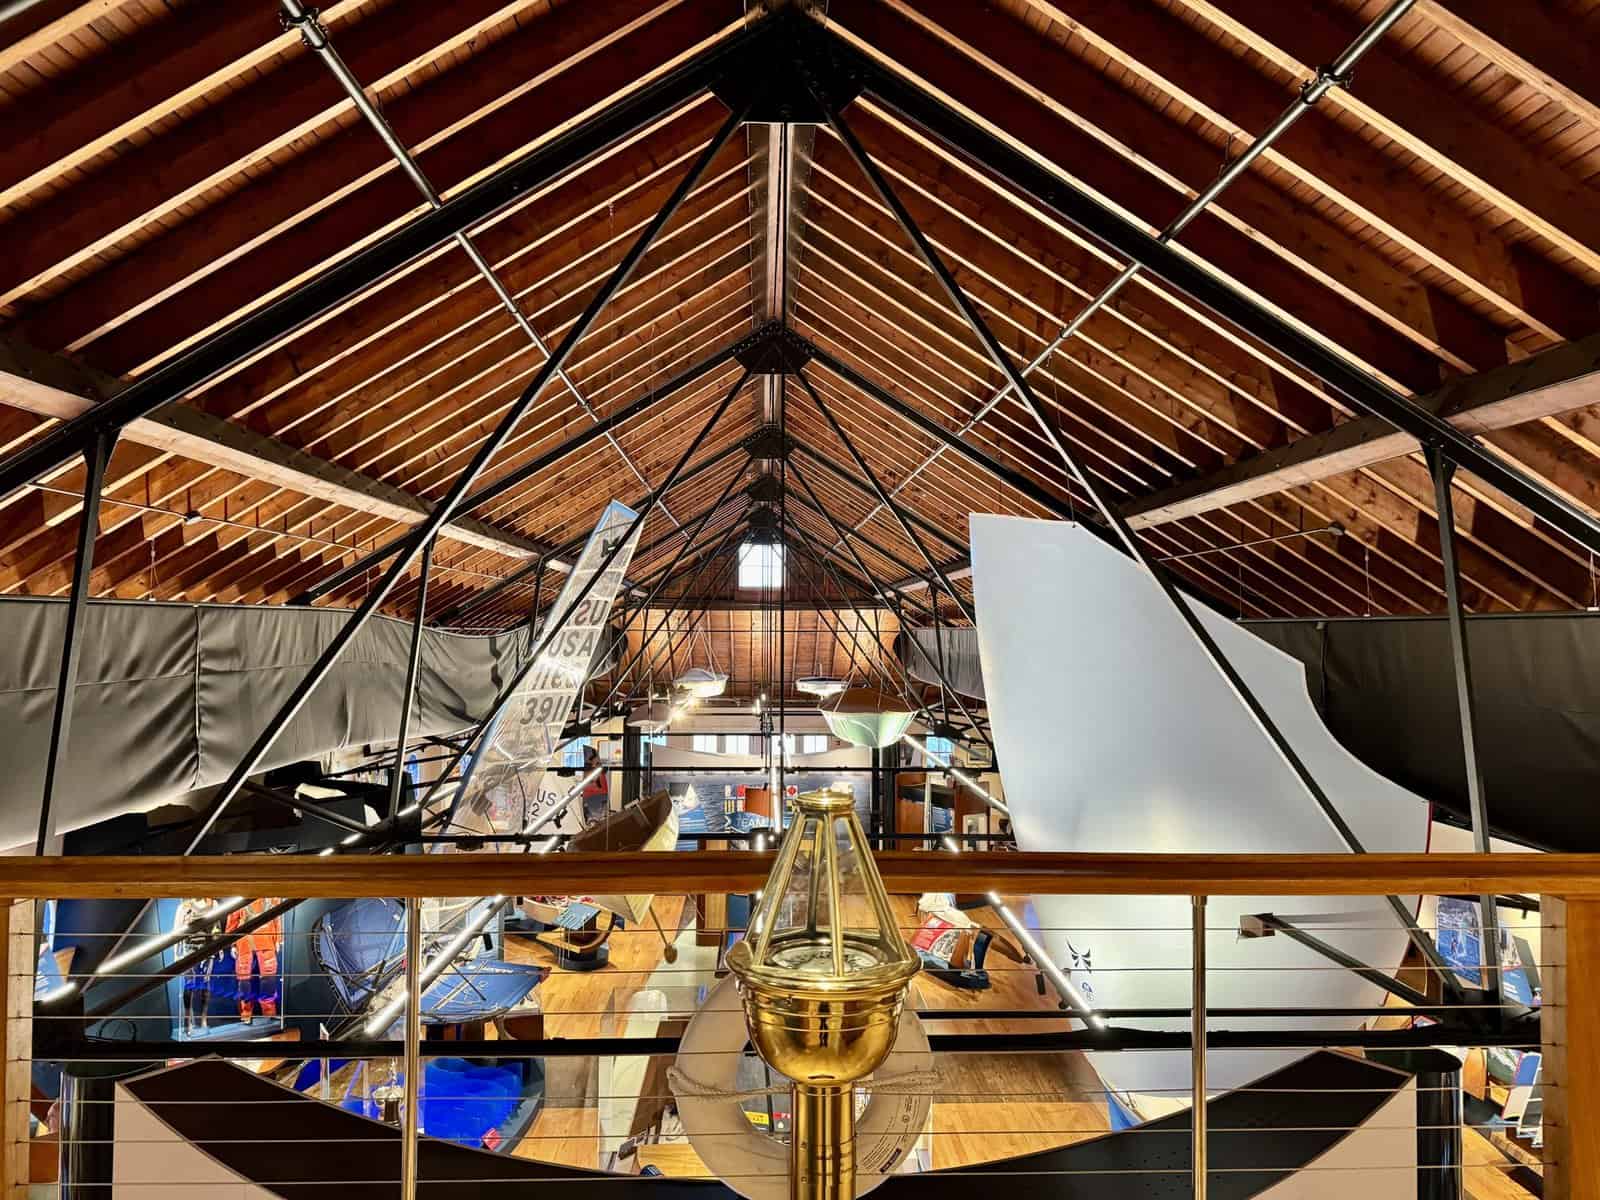 Nine Ways to Explore the Sailing Museum in Newport, Rhode Island